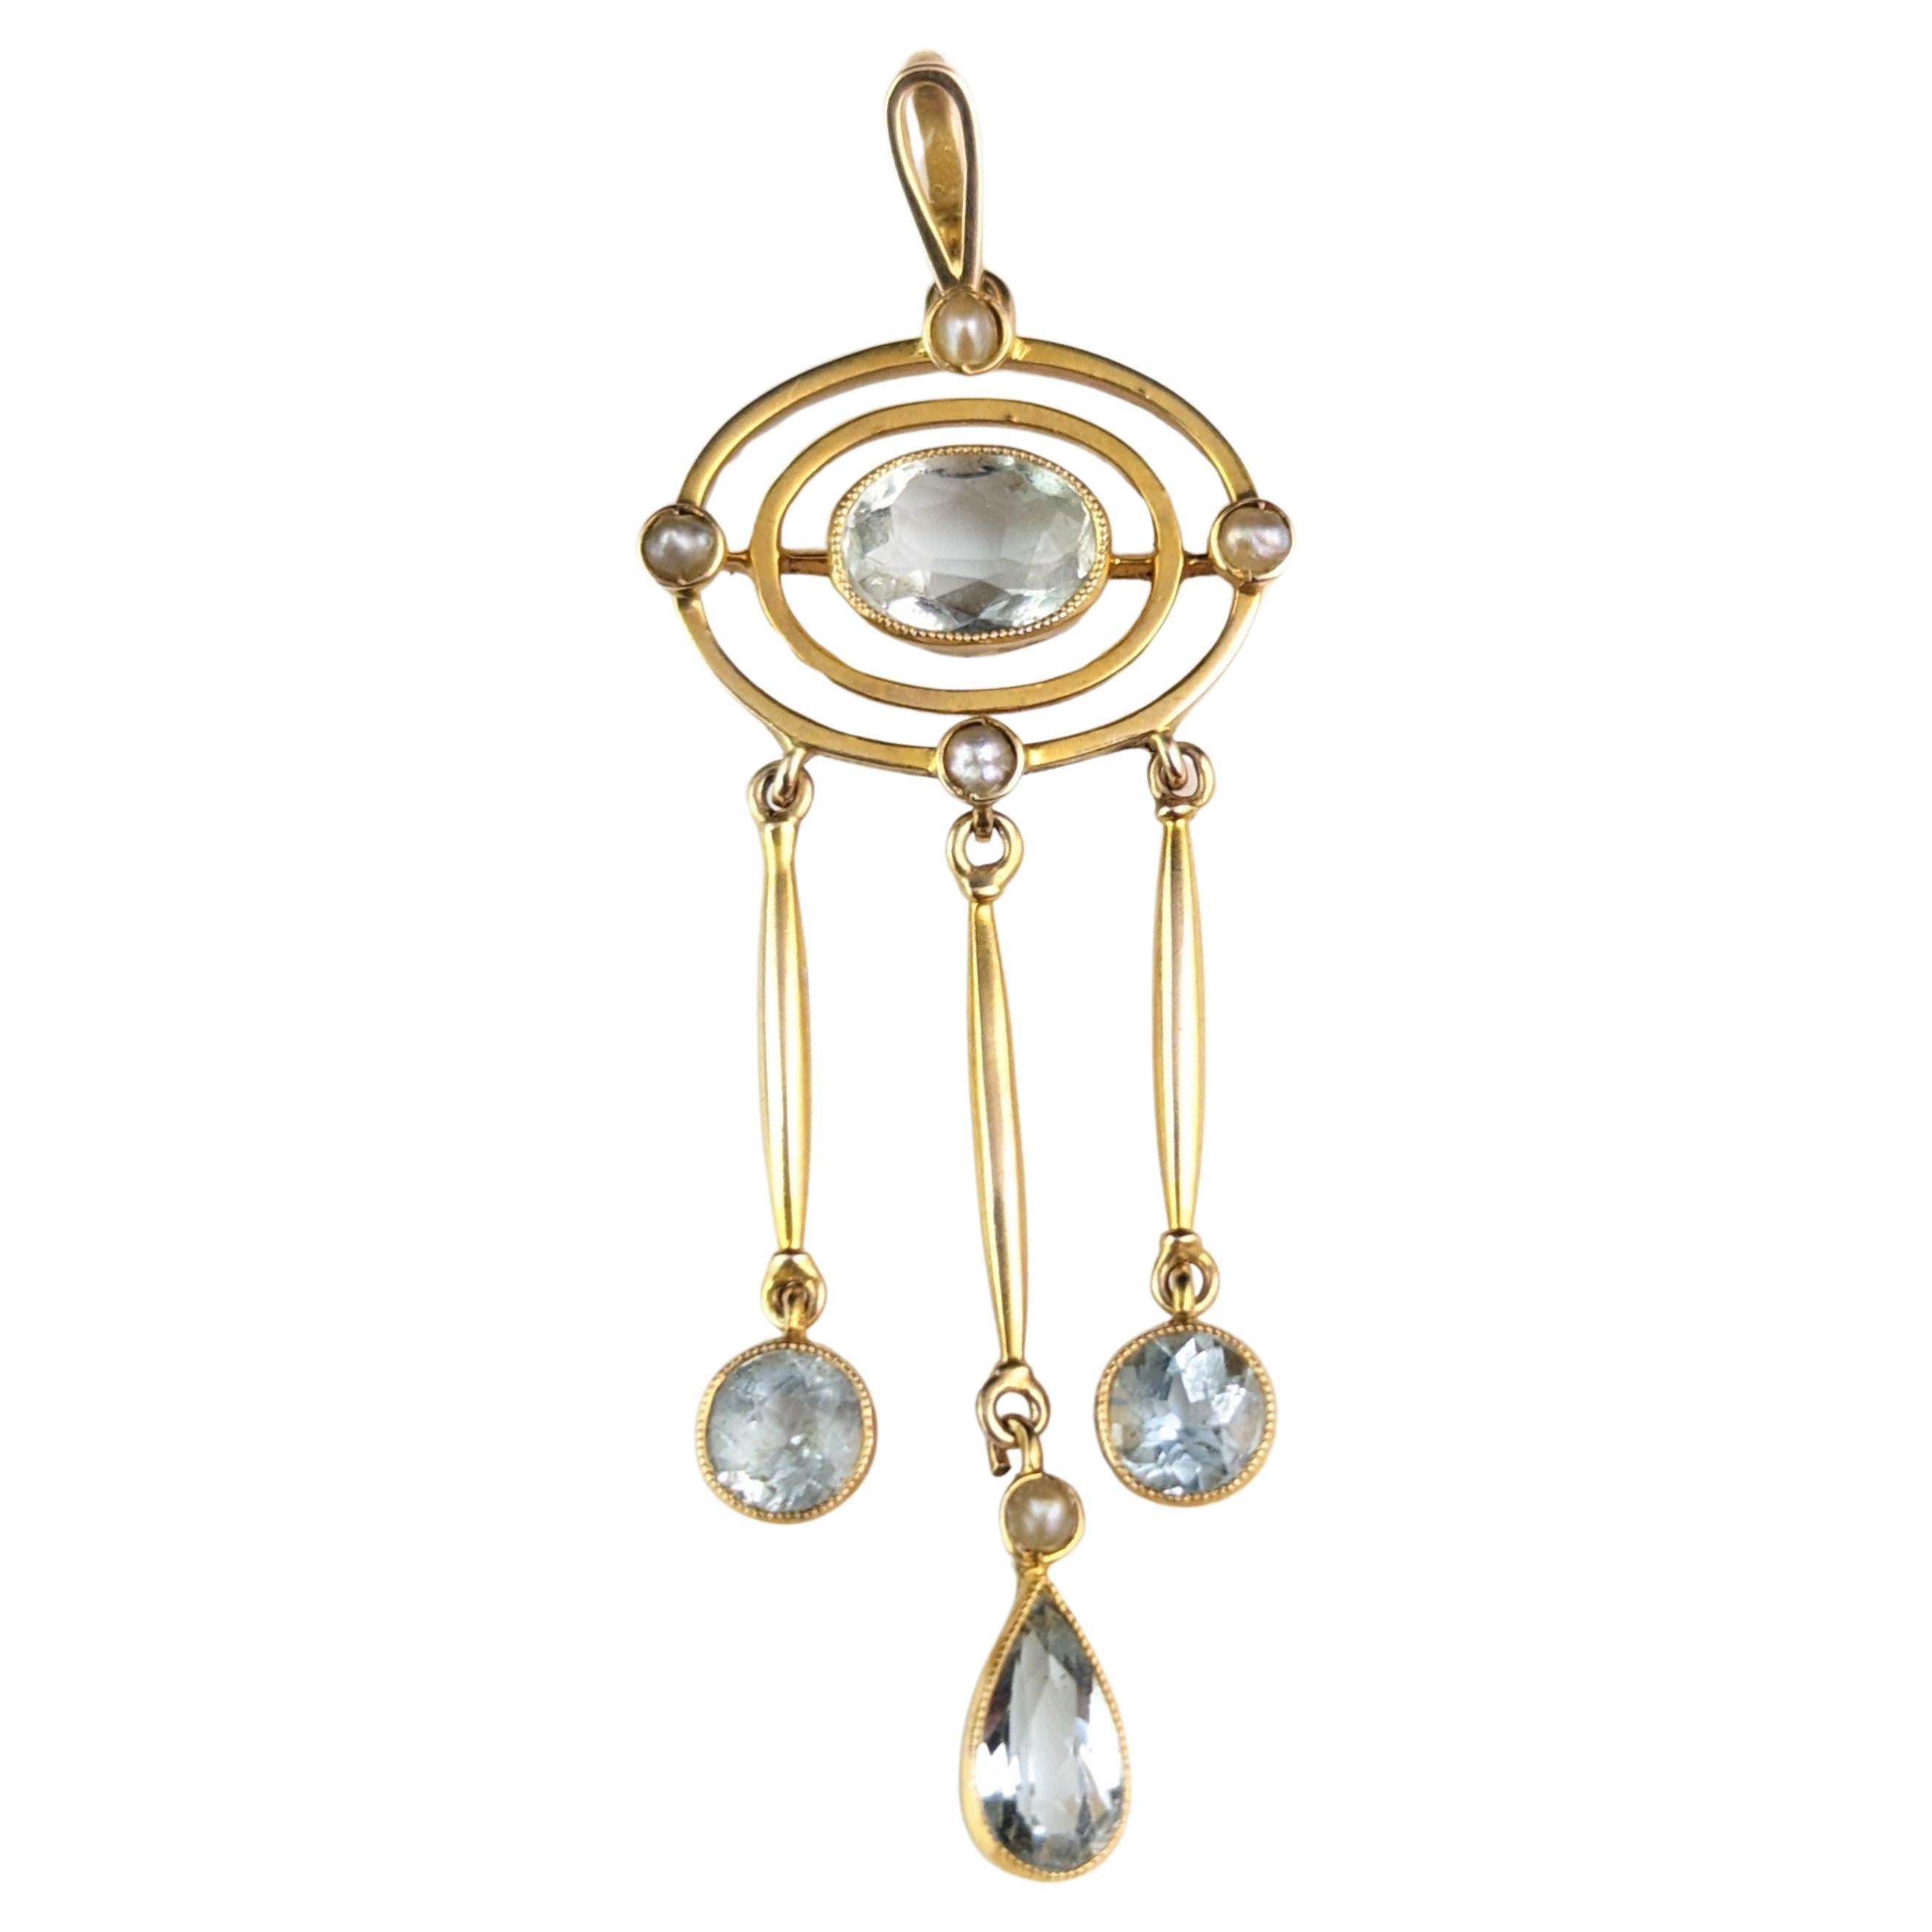 Antique Aquamarine drop pendant, 15k yellow gold, Pearl For Sale